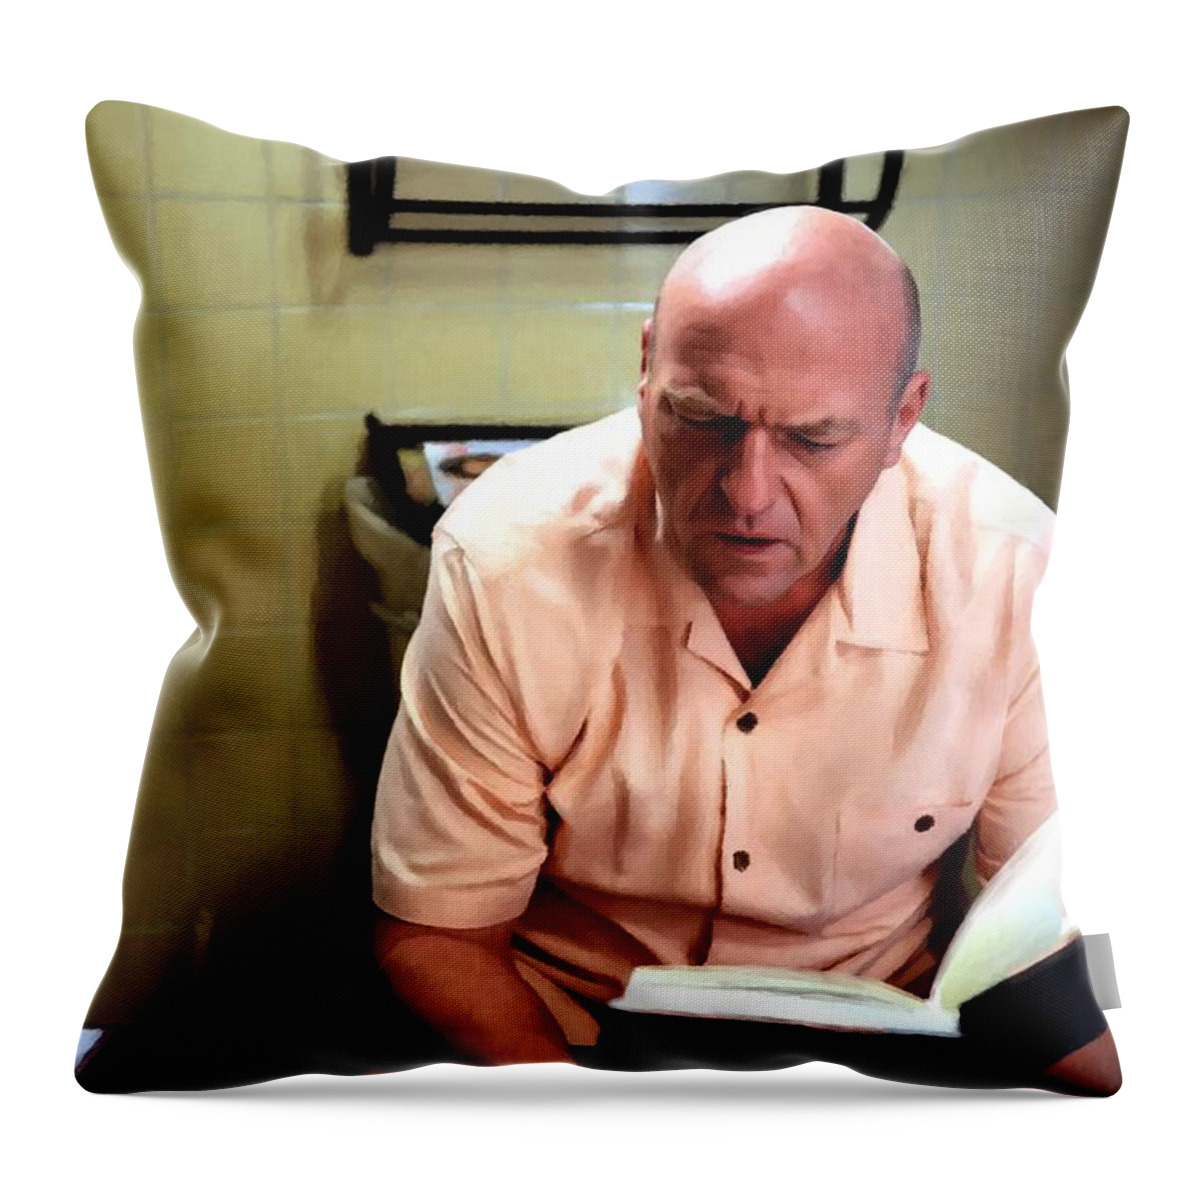  Throw Pillow featuring the digital art Hank Schrader sitting on WC Breking Bad - Last Season and Last Scene by Gabriel T Toro